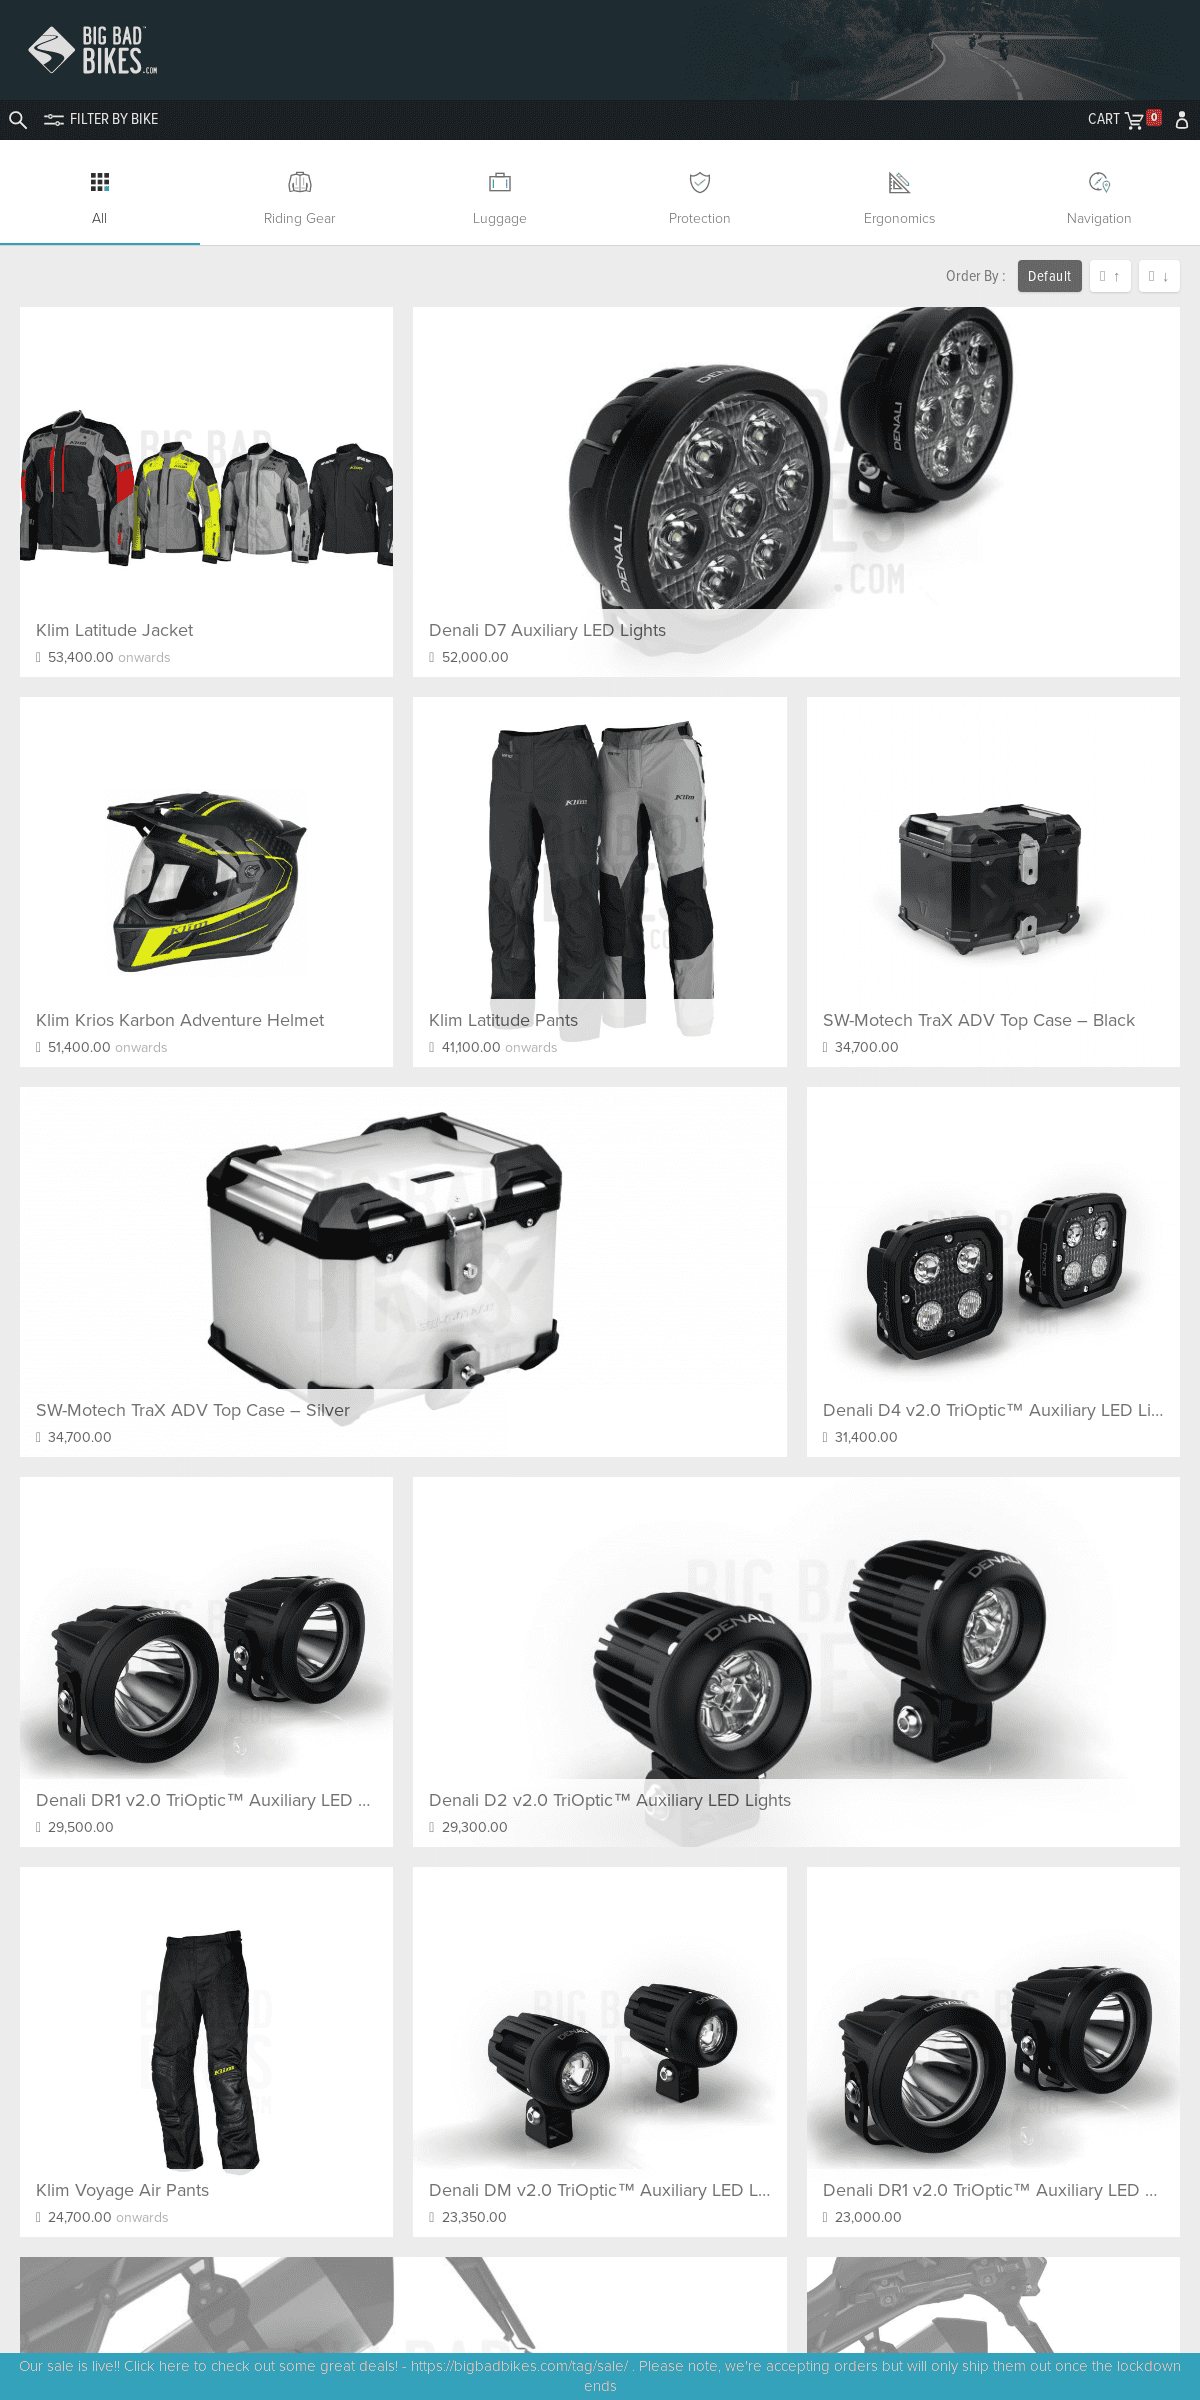 A complete backup of bigbadbikes.com